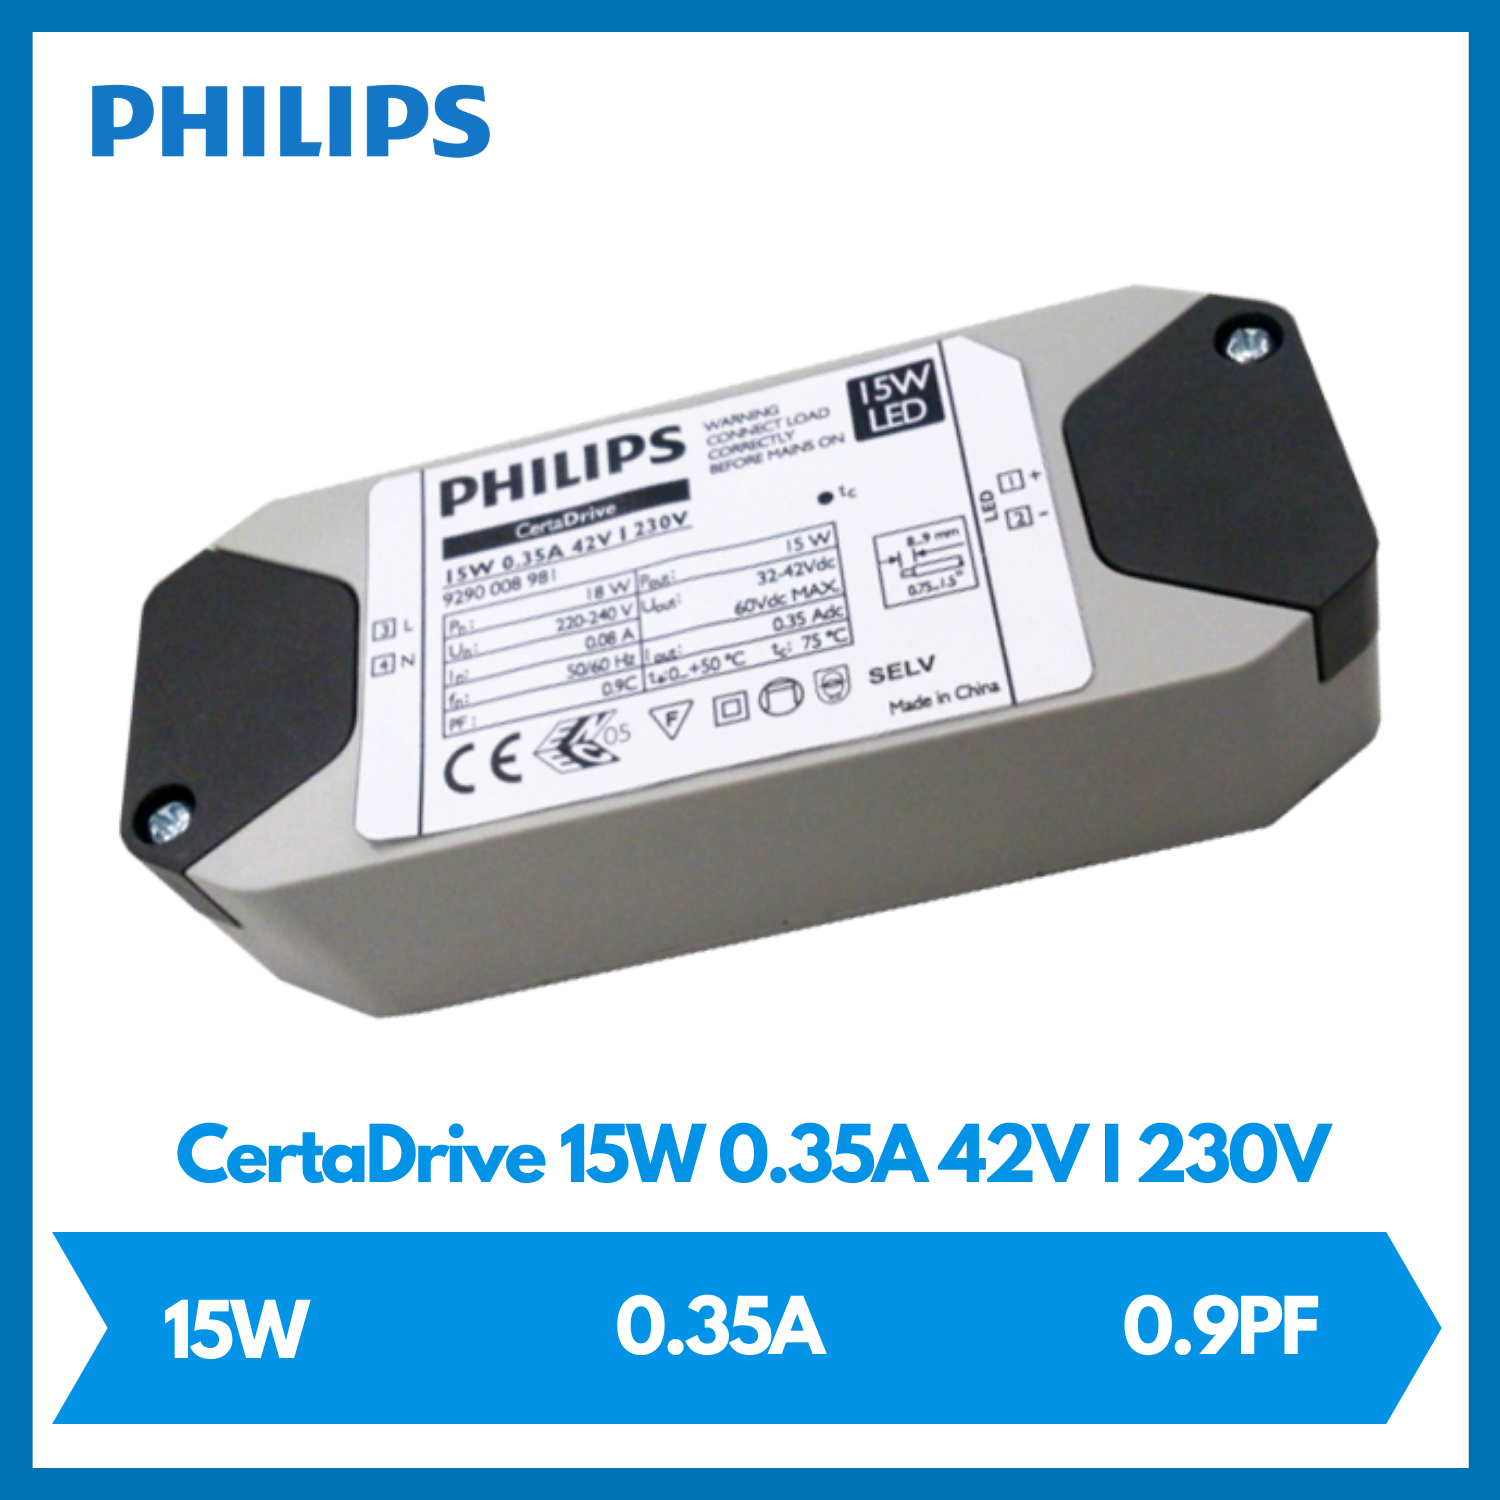 PHILIPS CertaDrive 15W 0.35A 42V I 230V